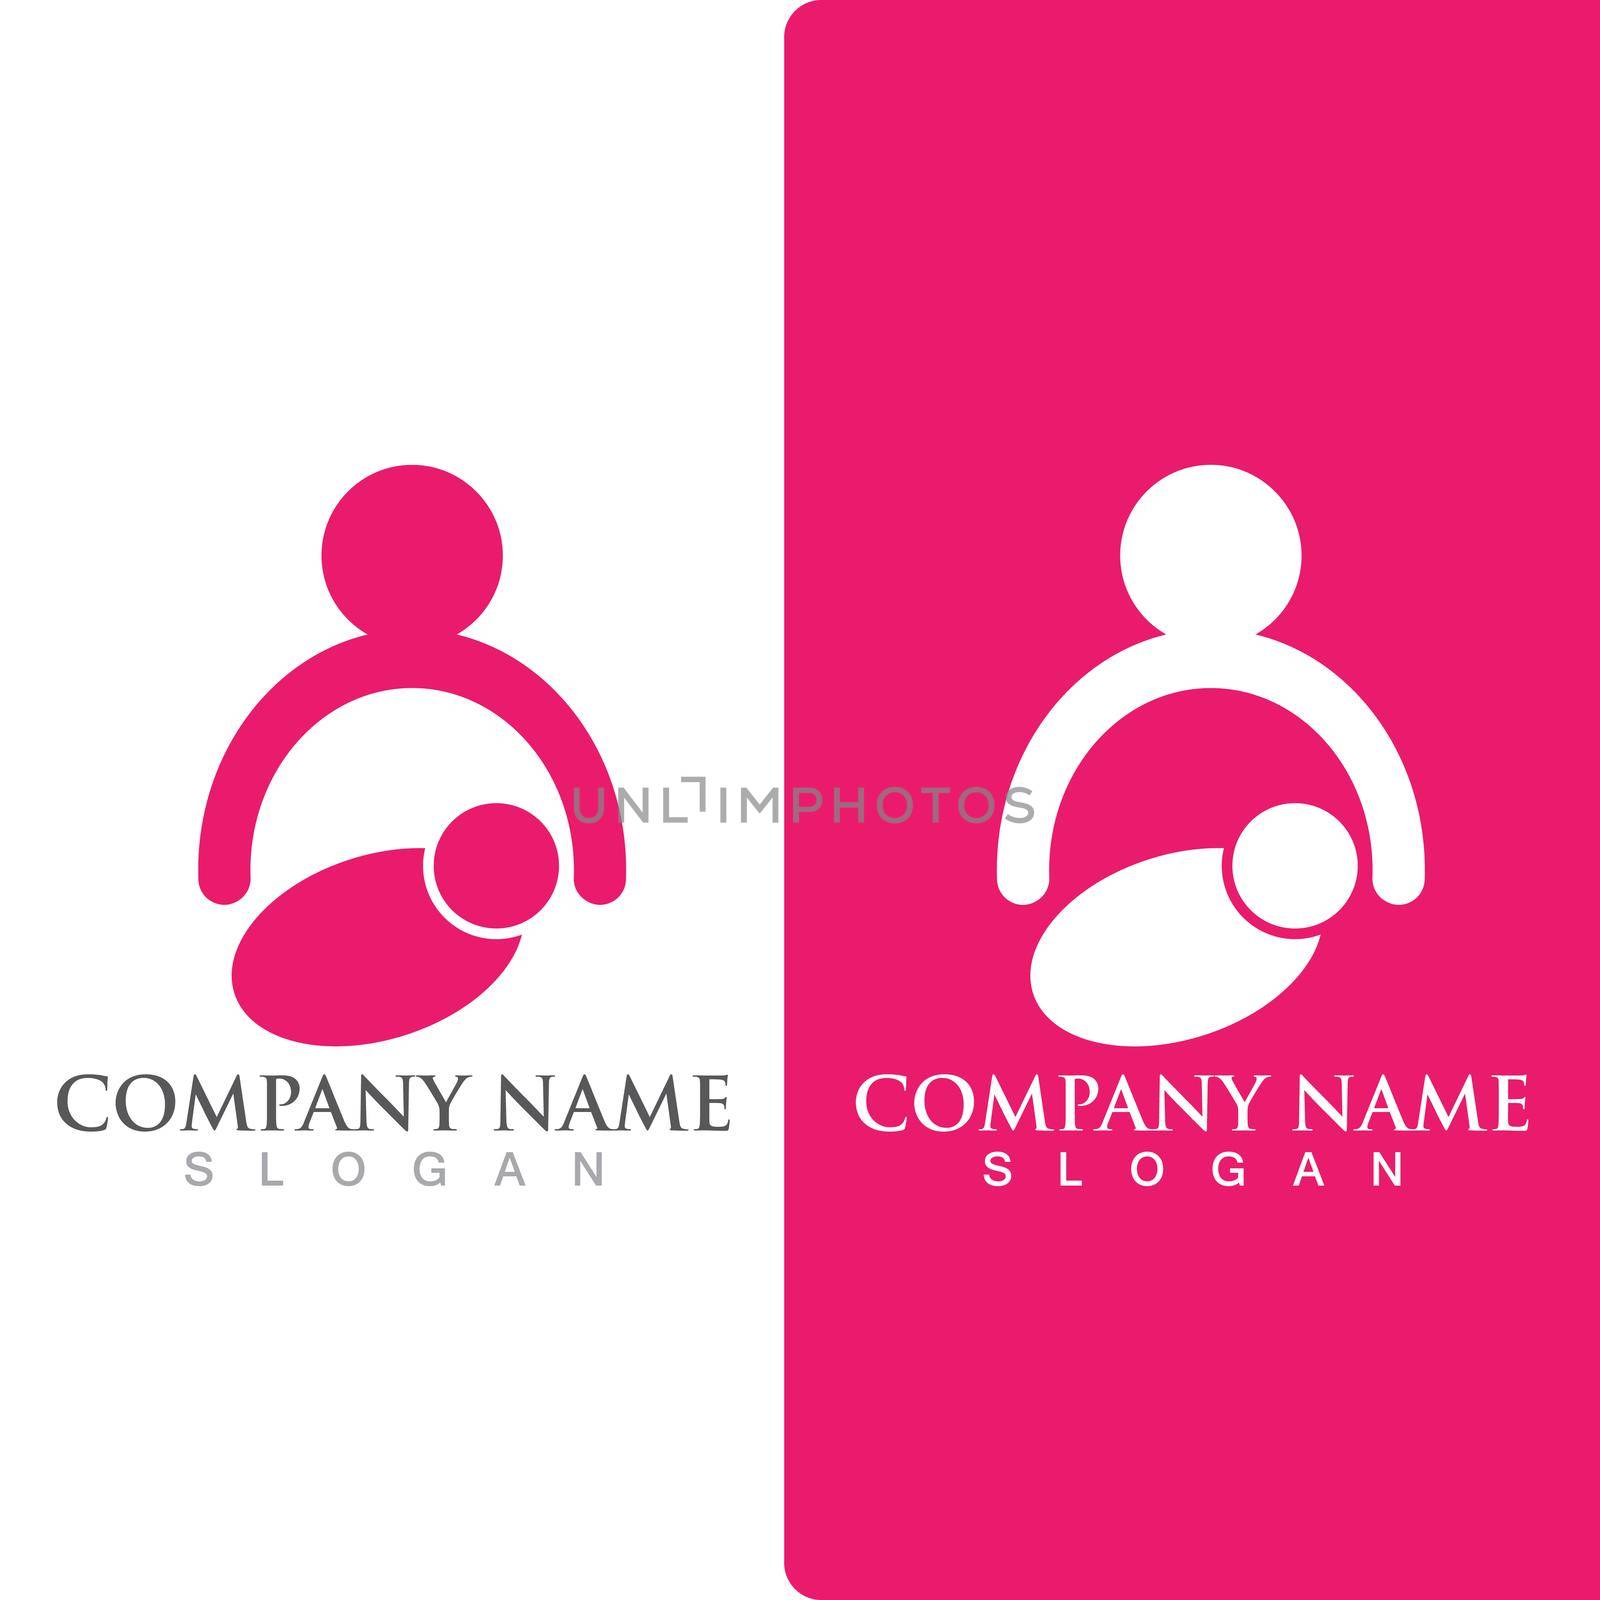 Adoption logo and symbol social icon design template